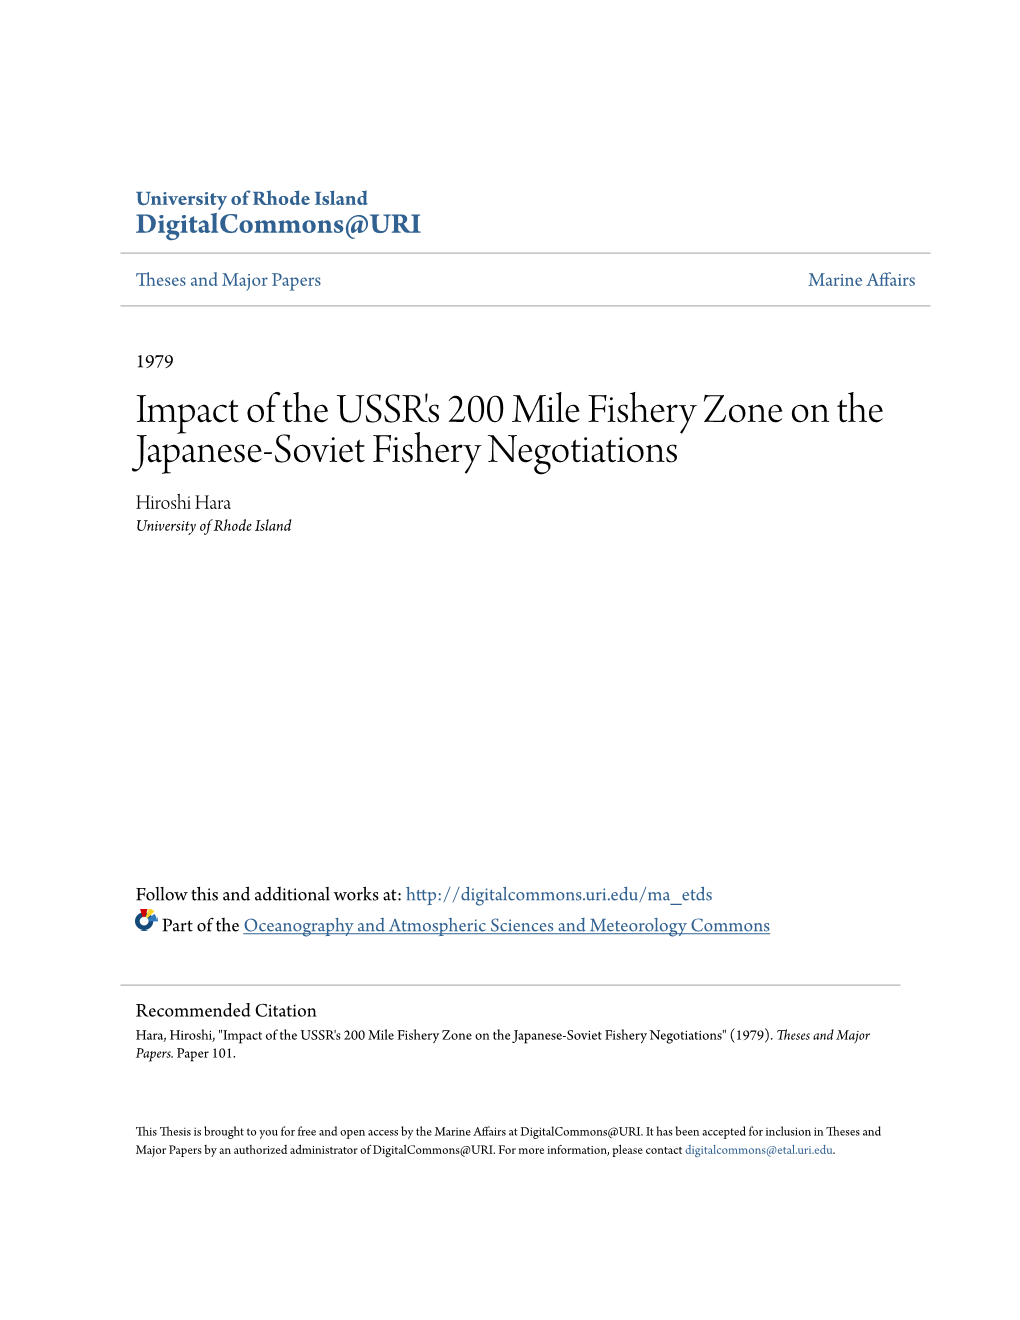 Impact of the USSR's 200 Mile Fishery Zone on the Japanese-Soviet Fishery Negotiations Hiroshi Hara University of Rhode Island